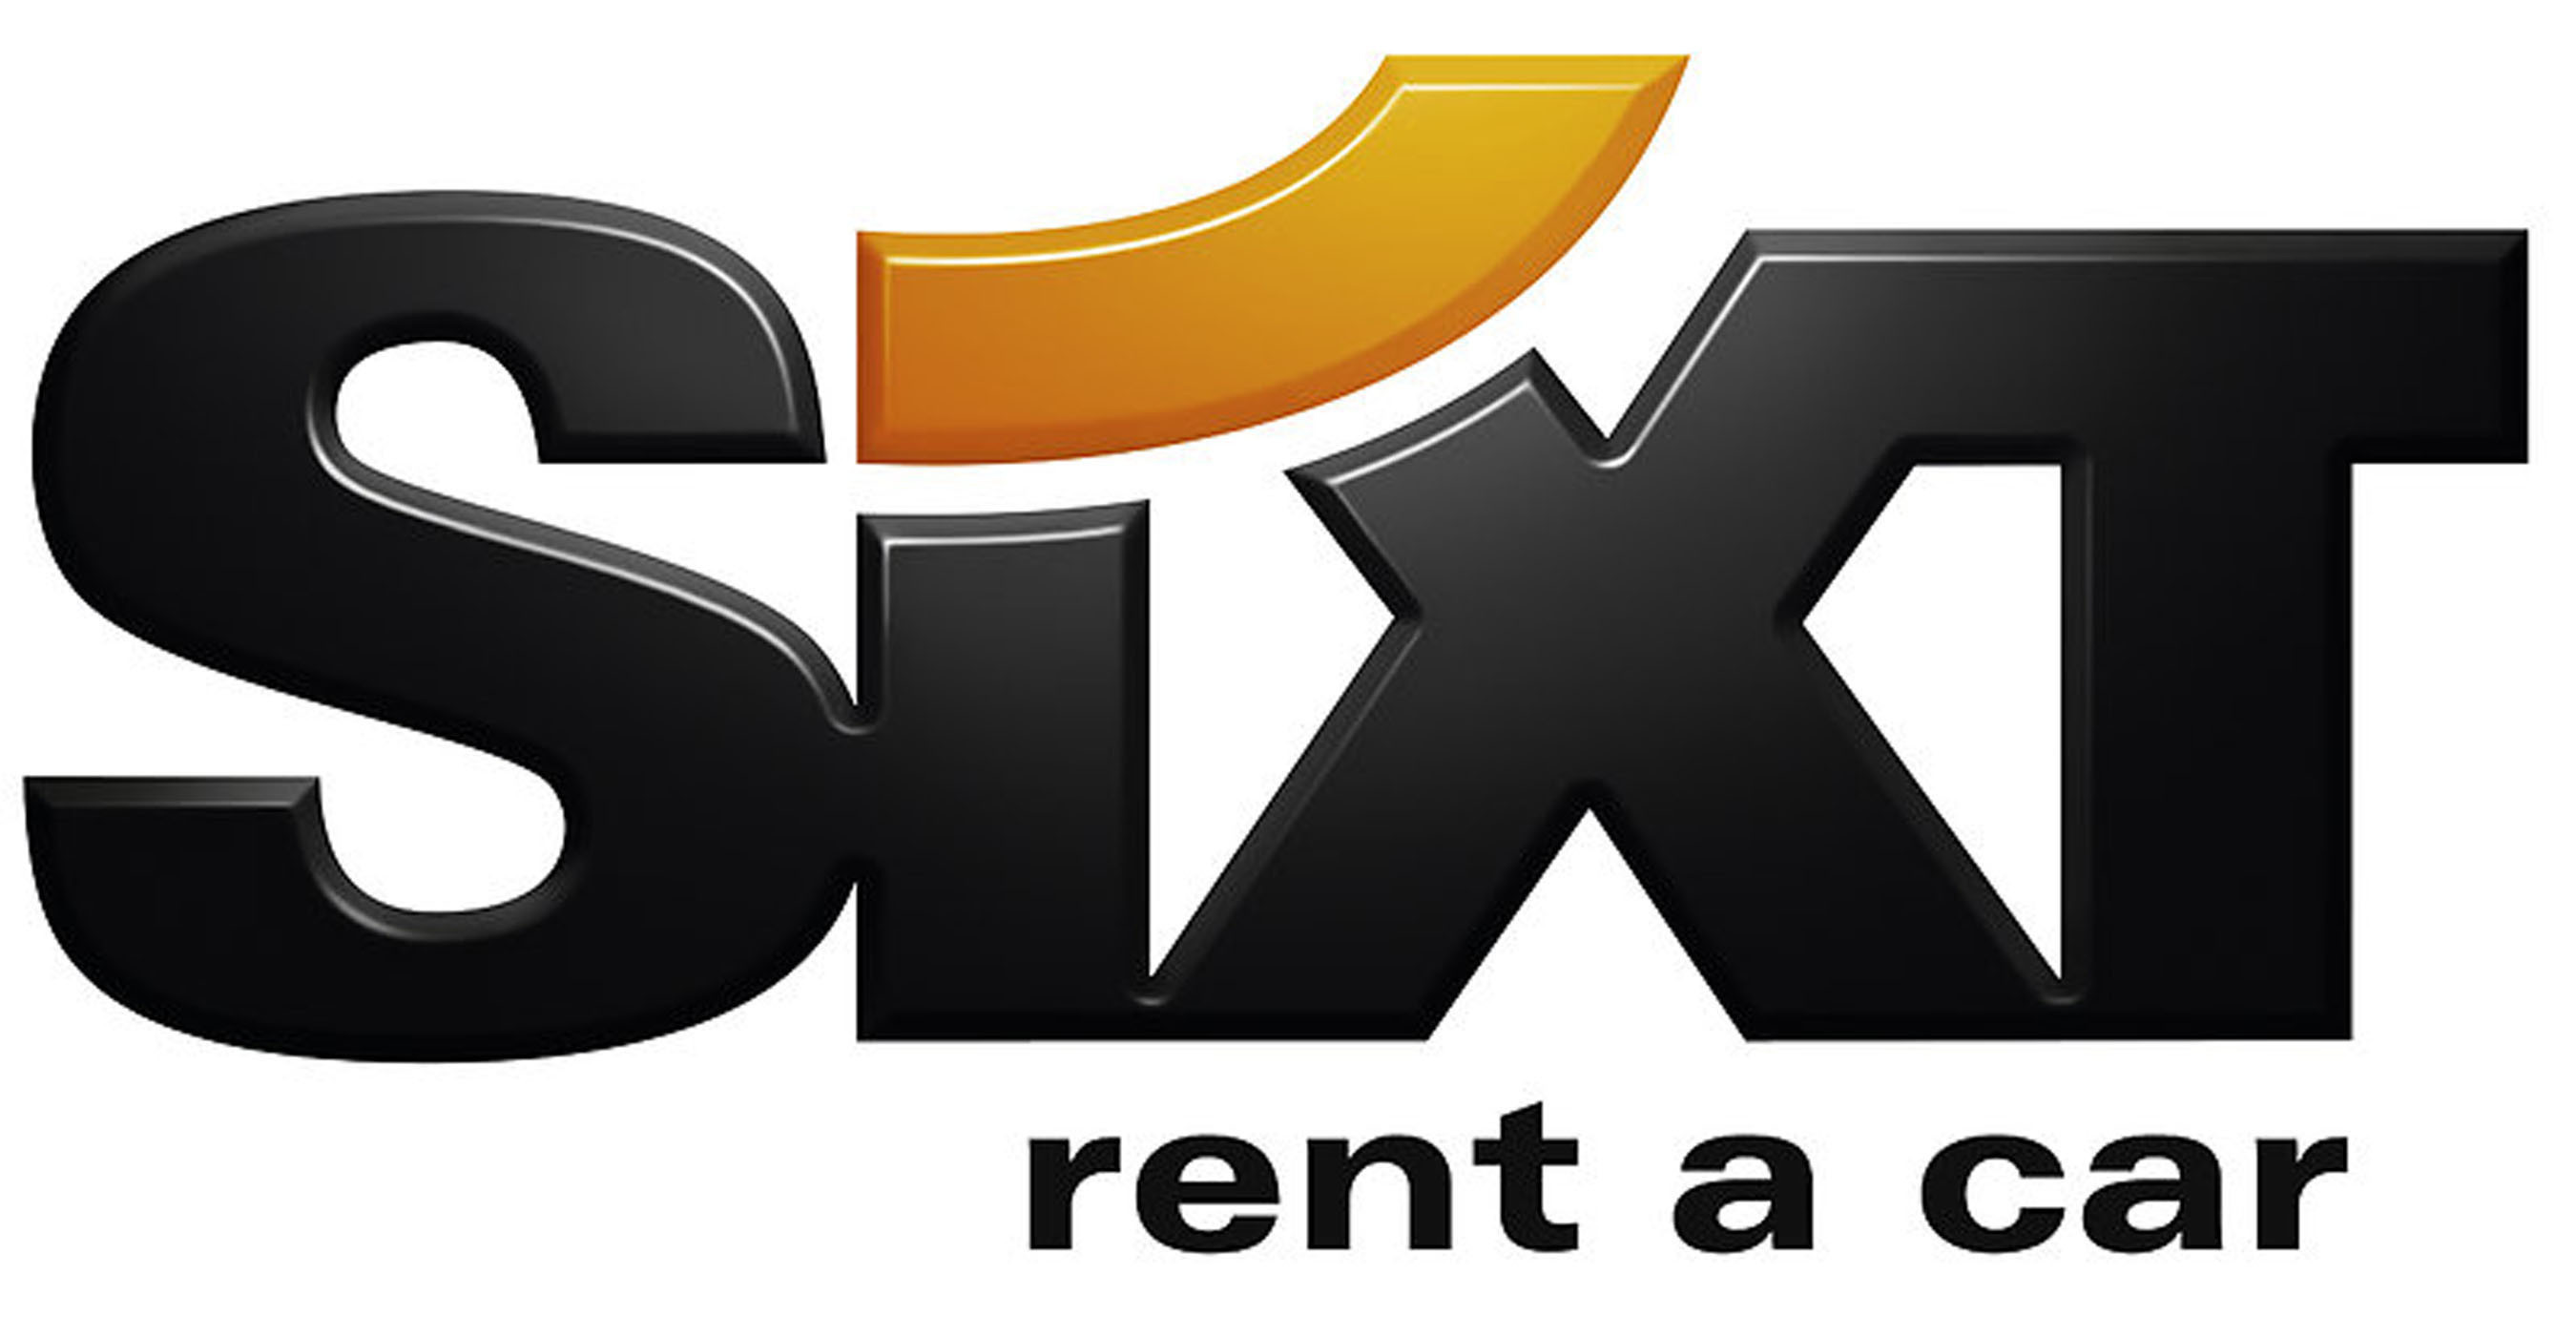 Sixt rent a car. (PRNewsFoto/Sixt Franchise USA, LLC) (PRNewsFoto/)